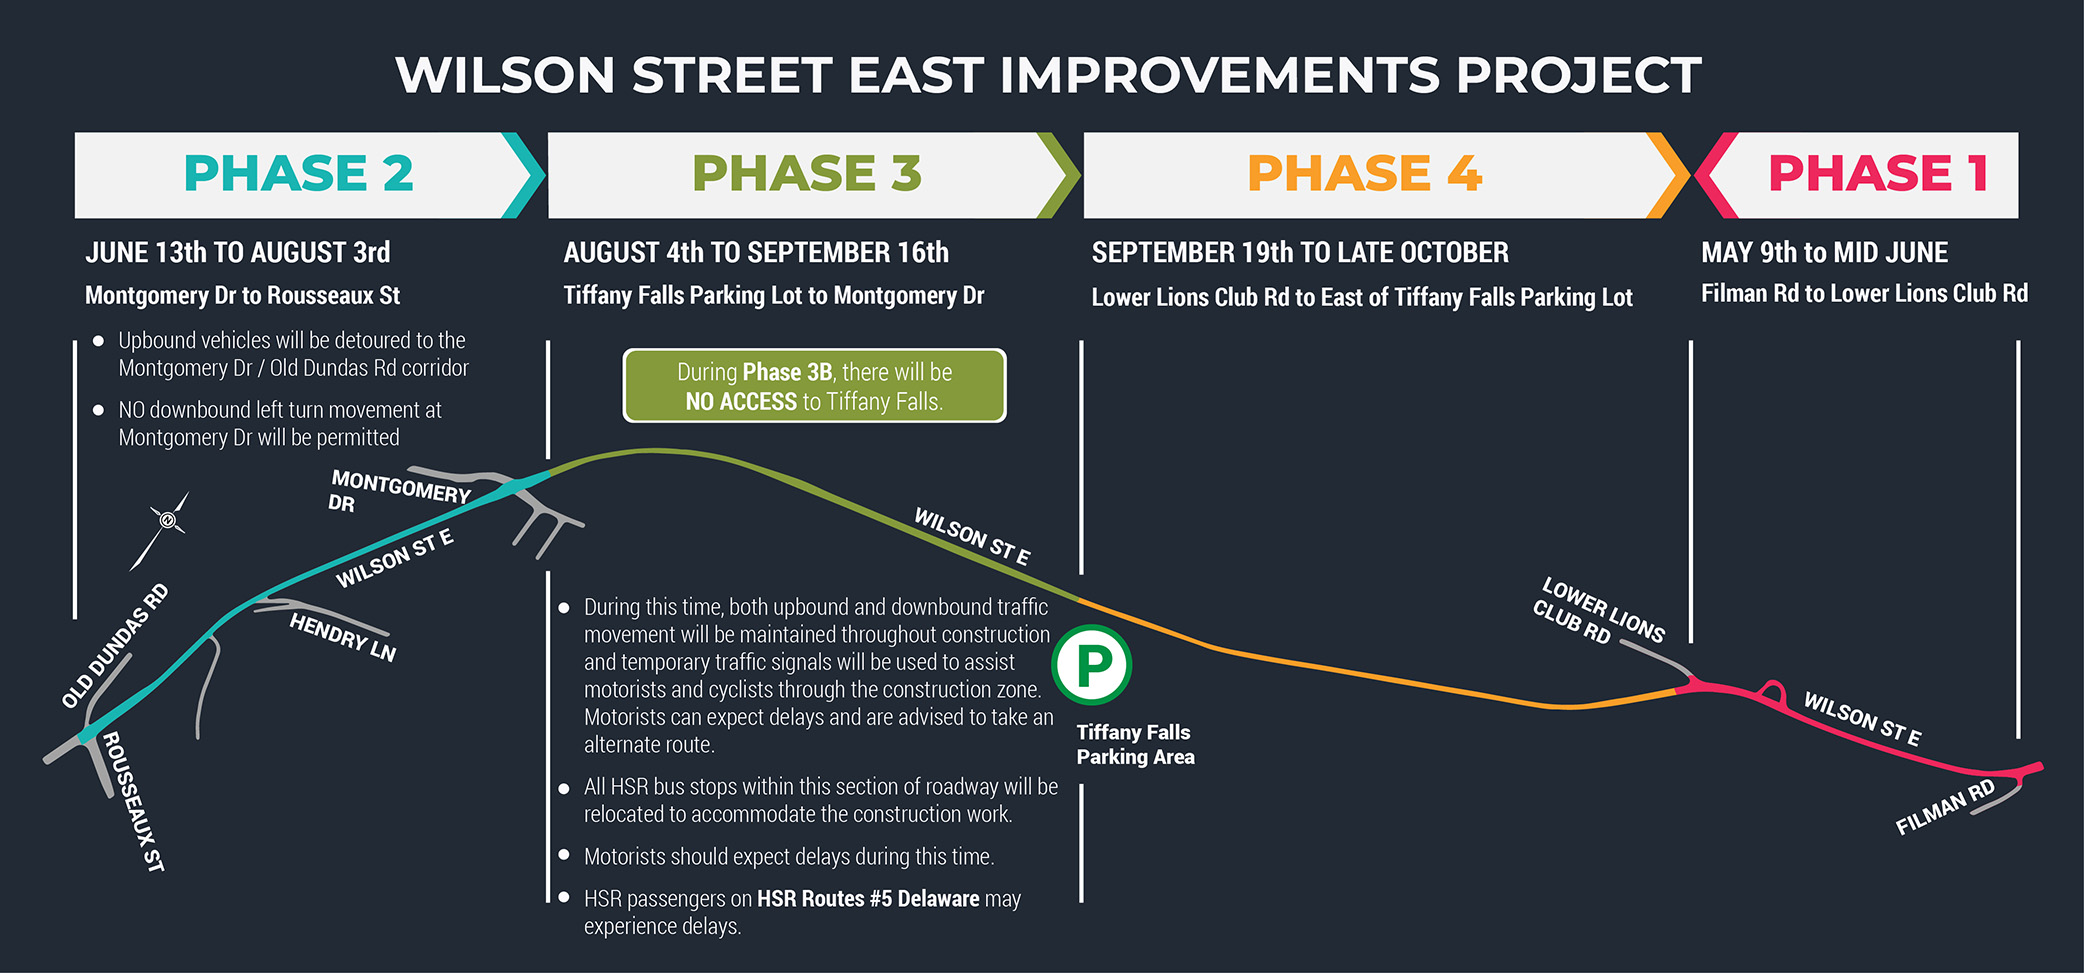 Wilson Street East Improvements Project